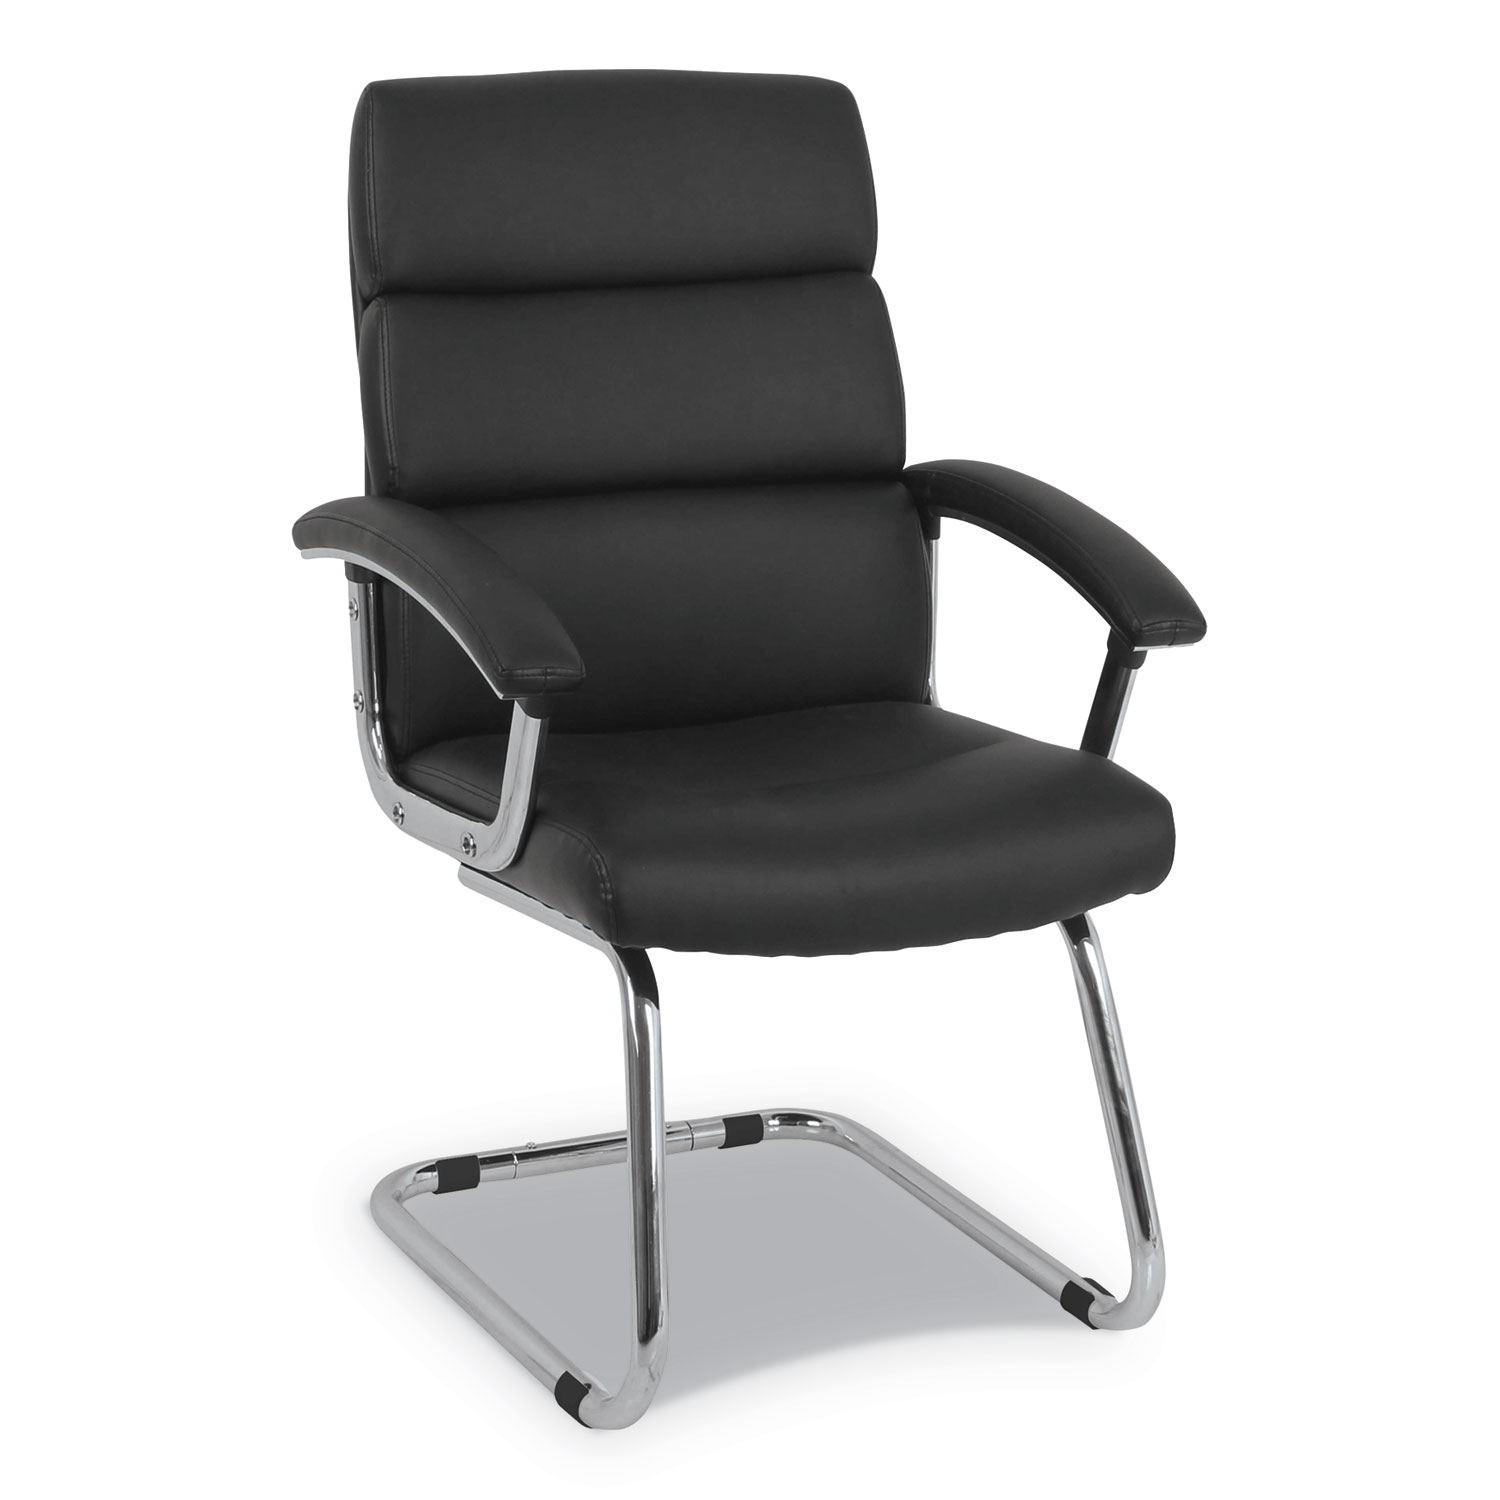  HON HVL102.SB11 Traction Guest Chair, 20.1 x 27.2 x 39.3, Black Seat/Black Back, Chrome Base (HONVL102SB11) 